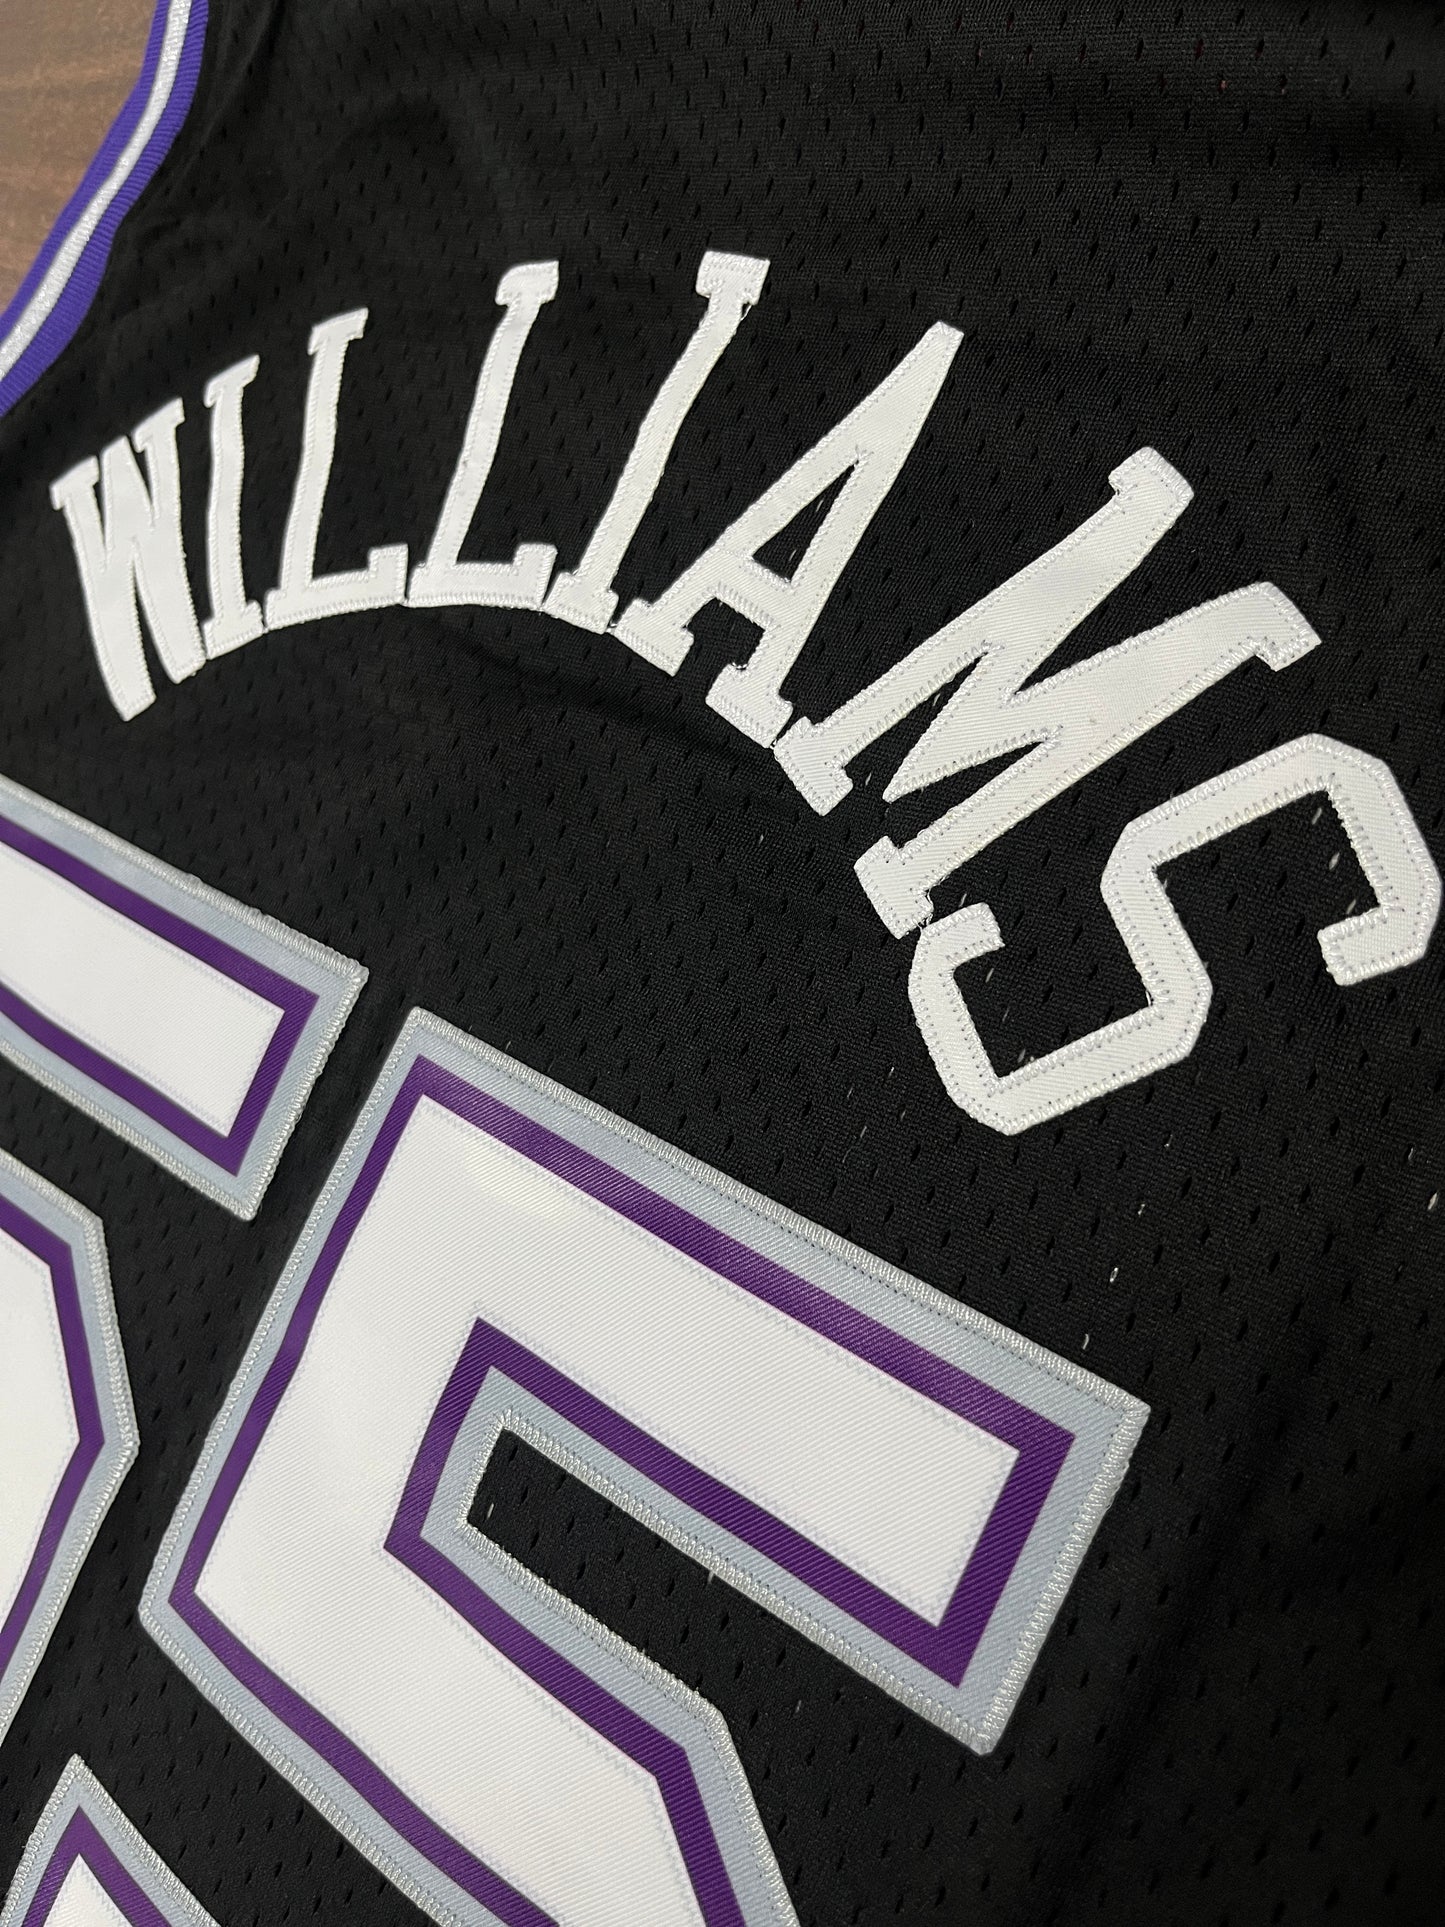 WILLIAMS 55 Black Sacramento Kings NBA Jersey